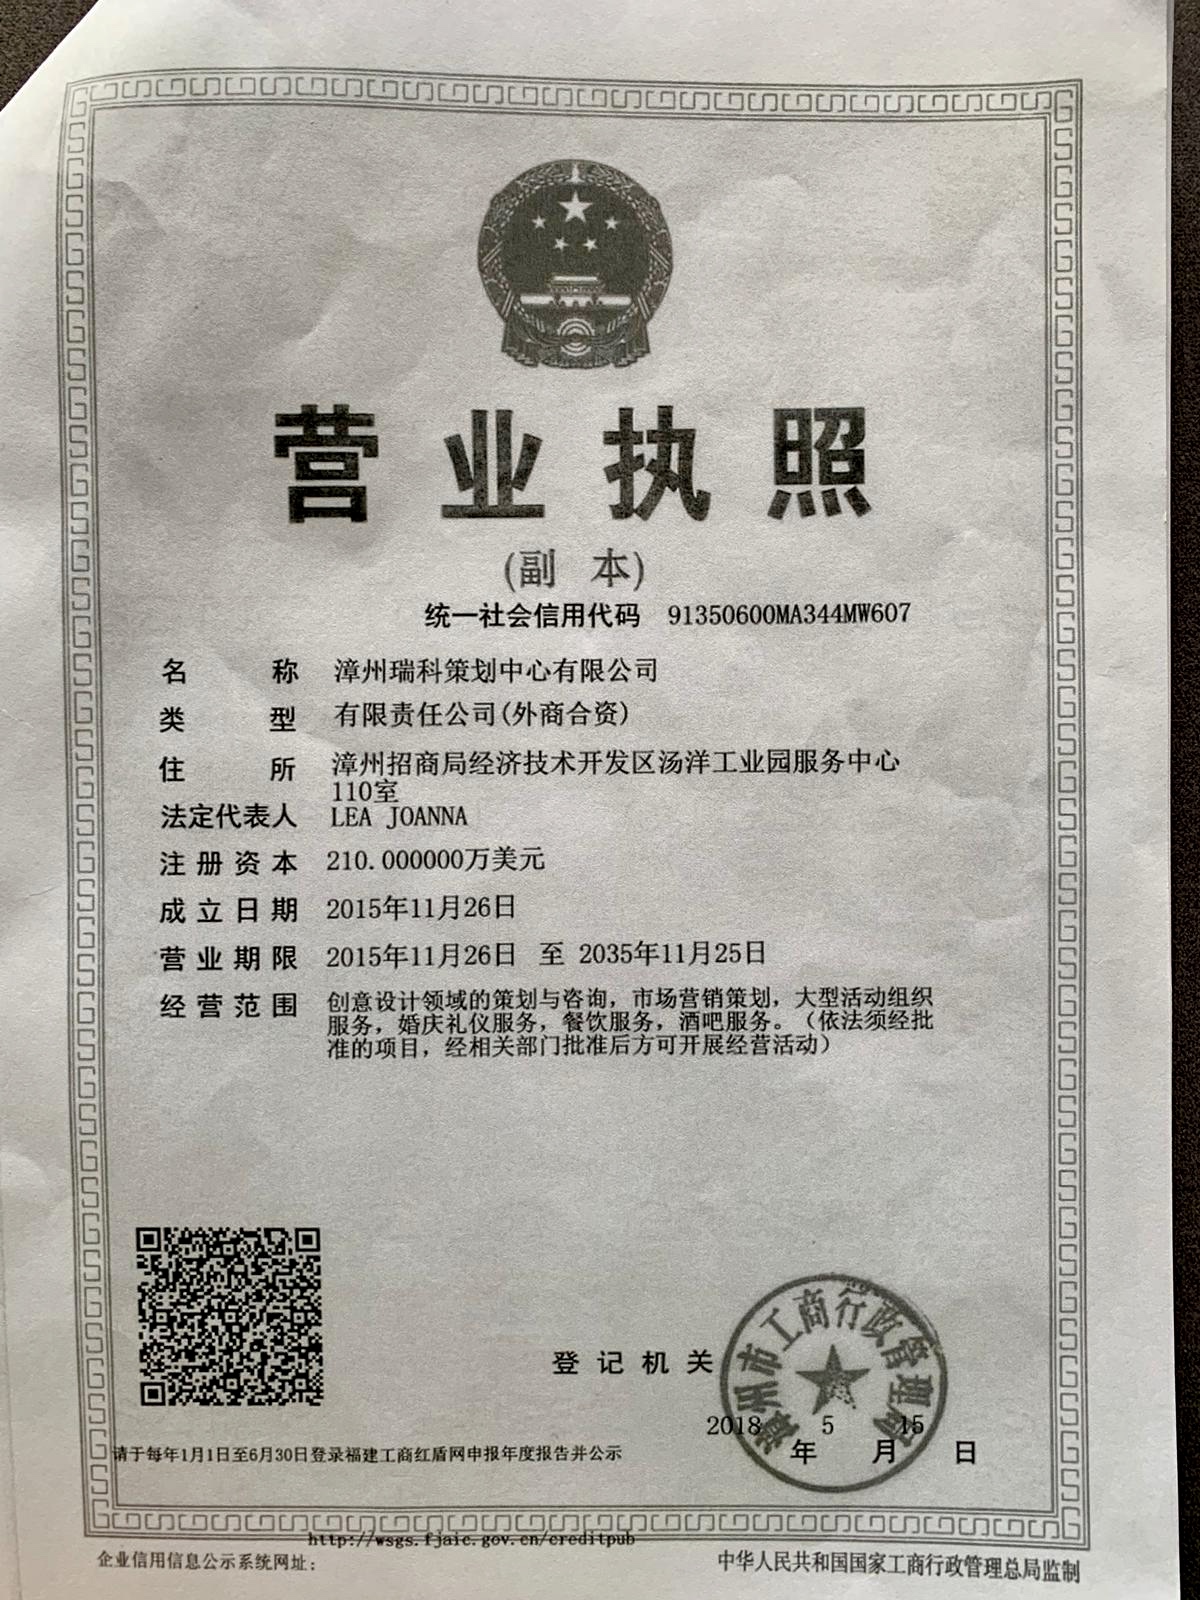 China company business license